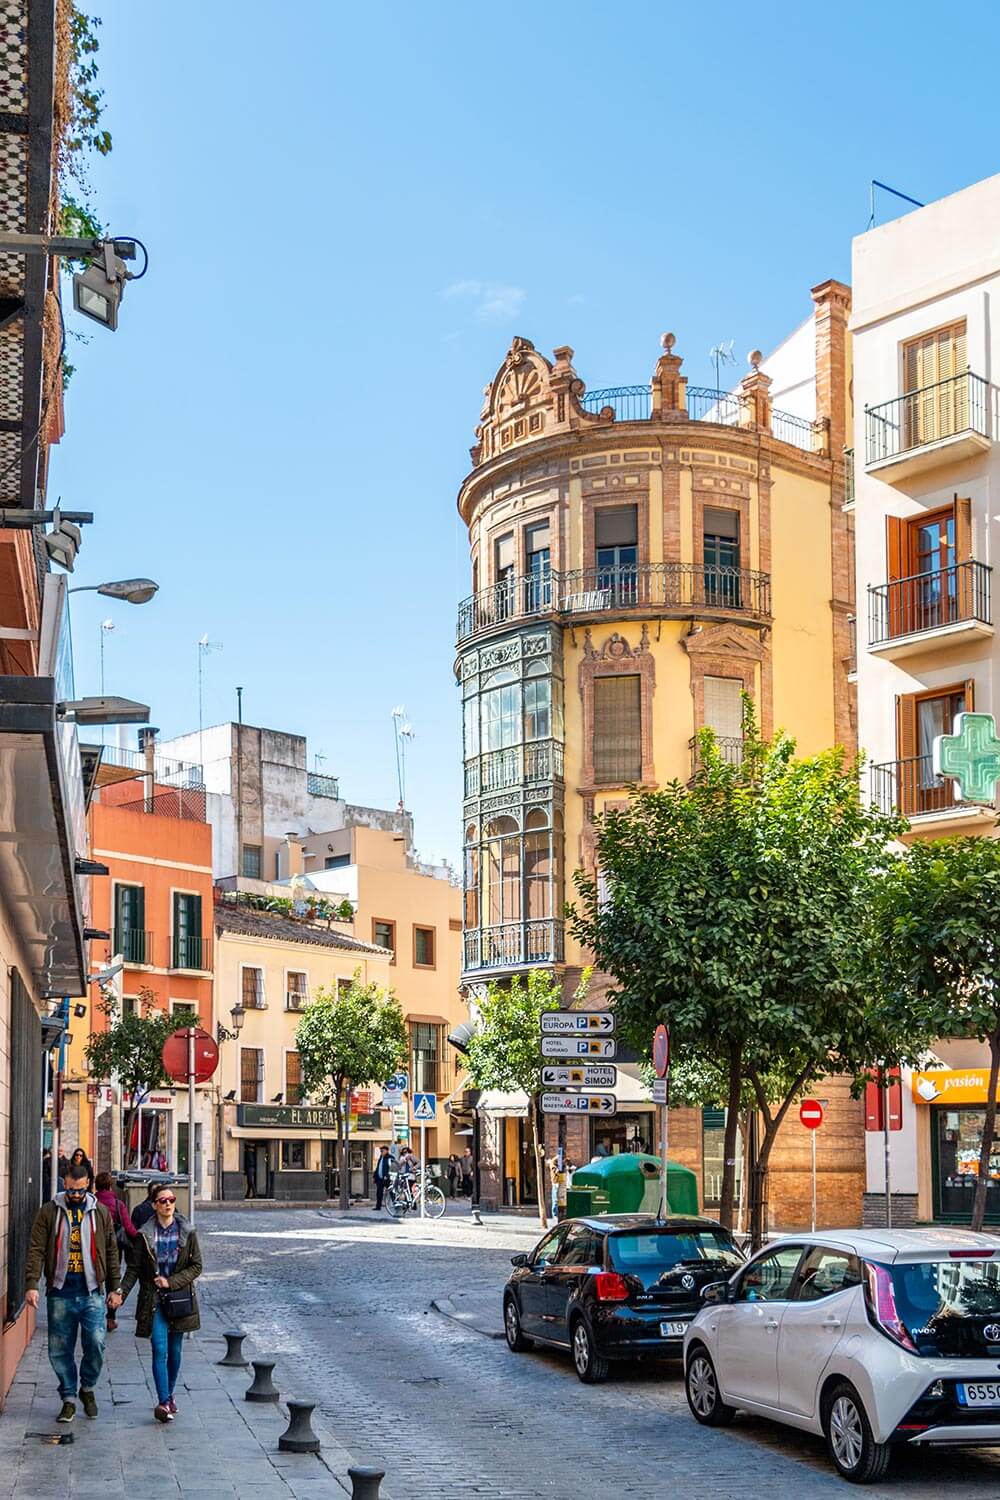 Stunning Architecture in Seville